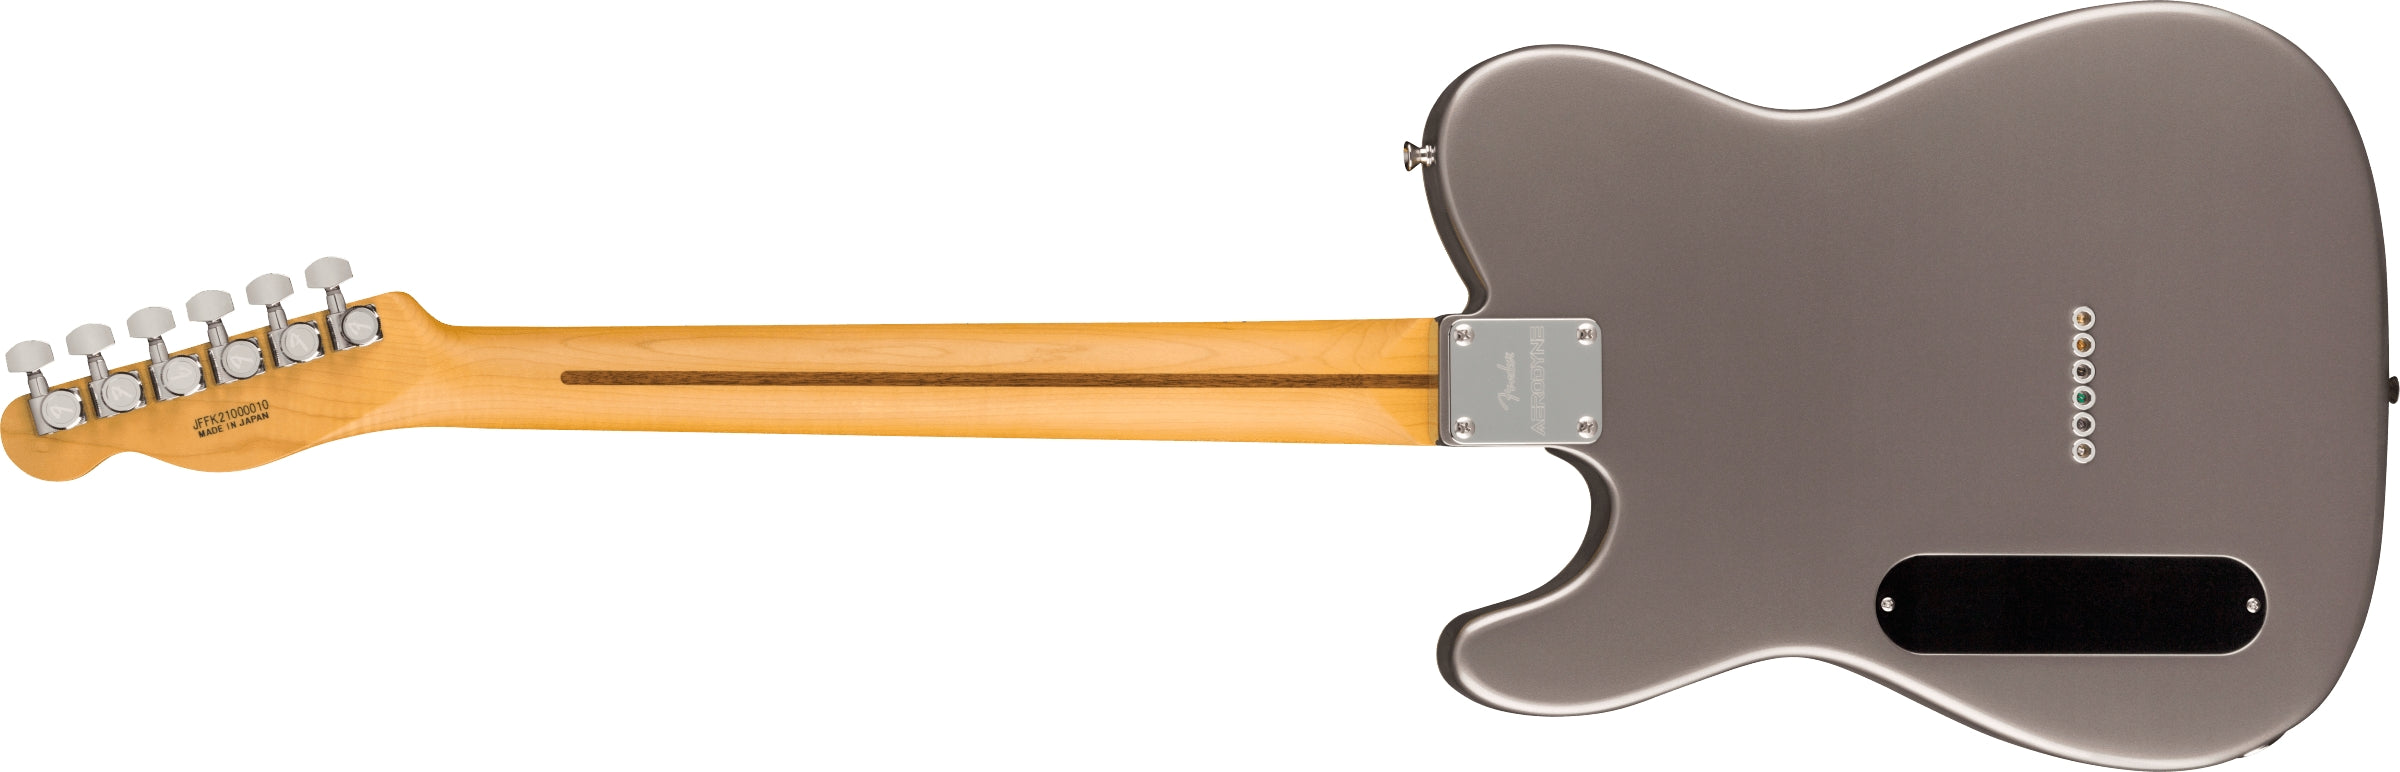 Fender - Aerodyne Special Telecaster® - Maple Fingerboard 